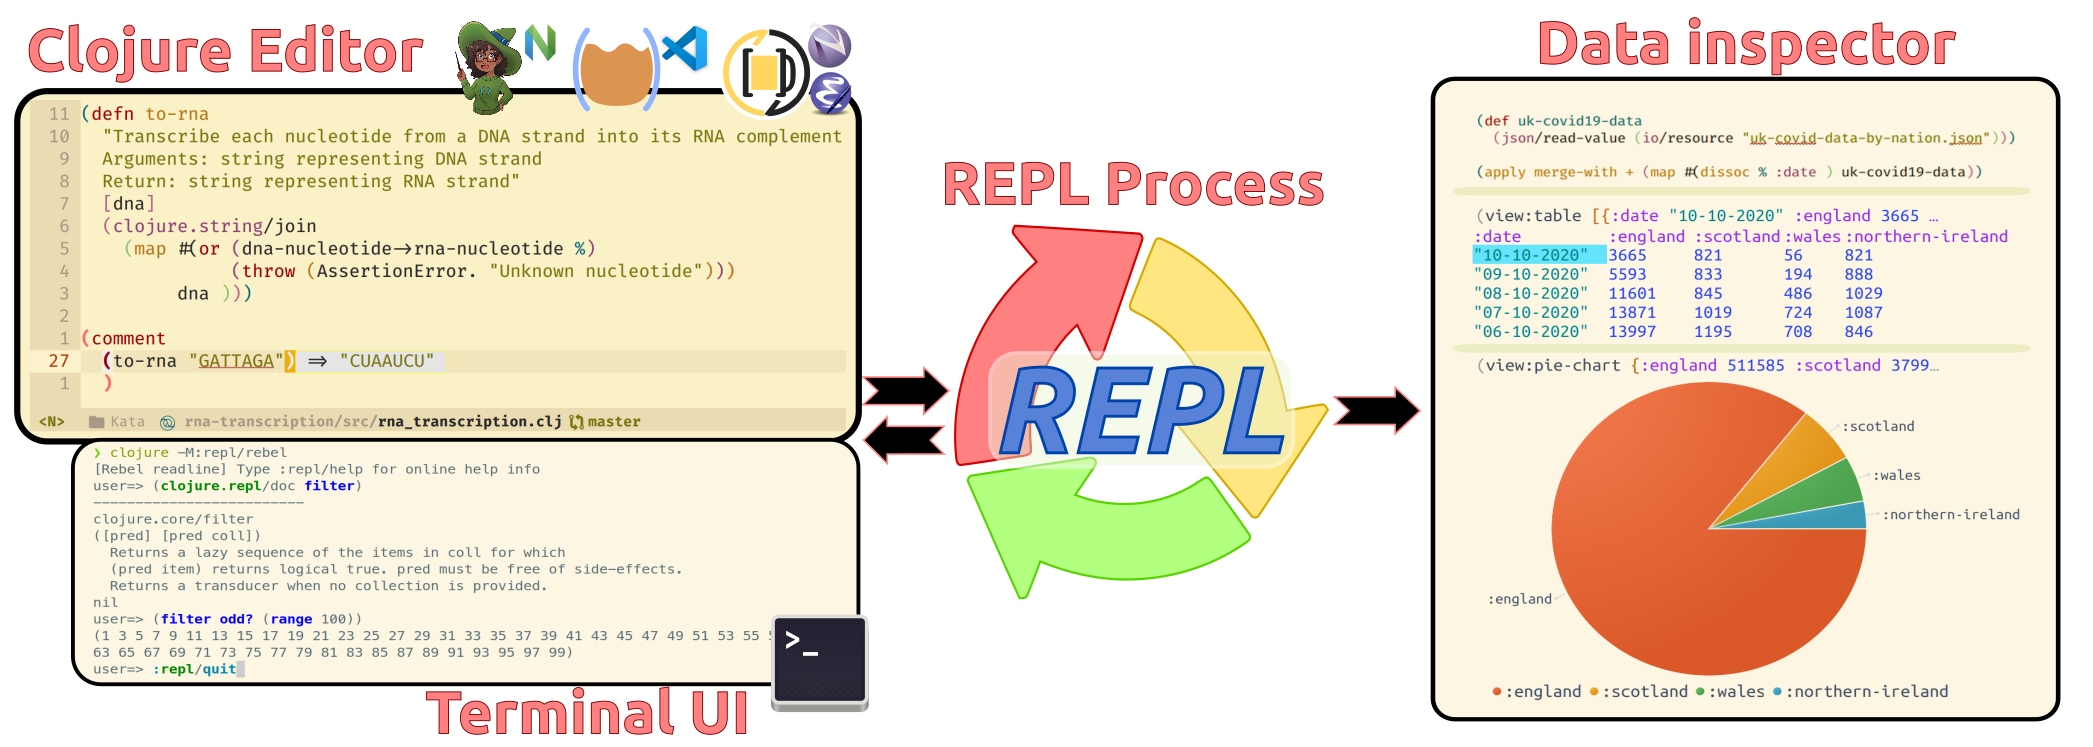 Clojure Repl workflow - concept